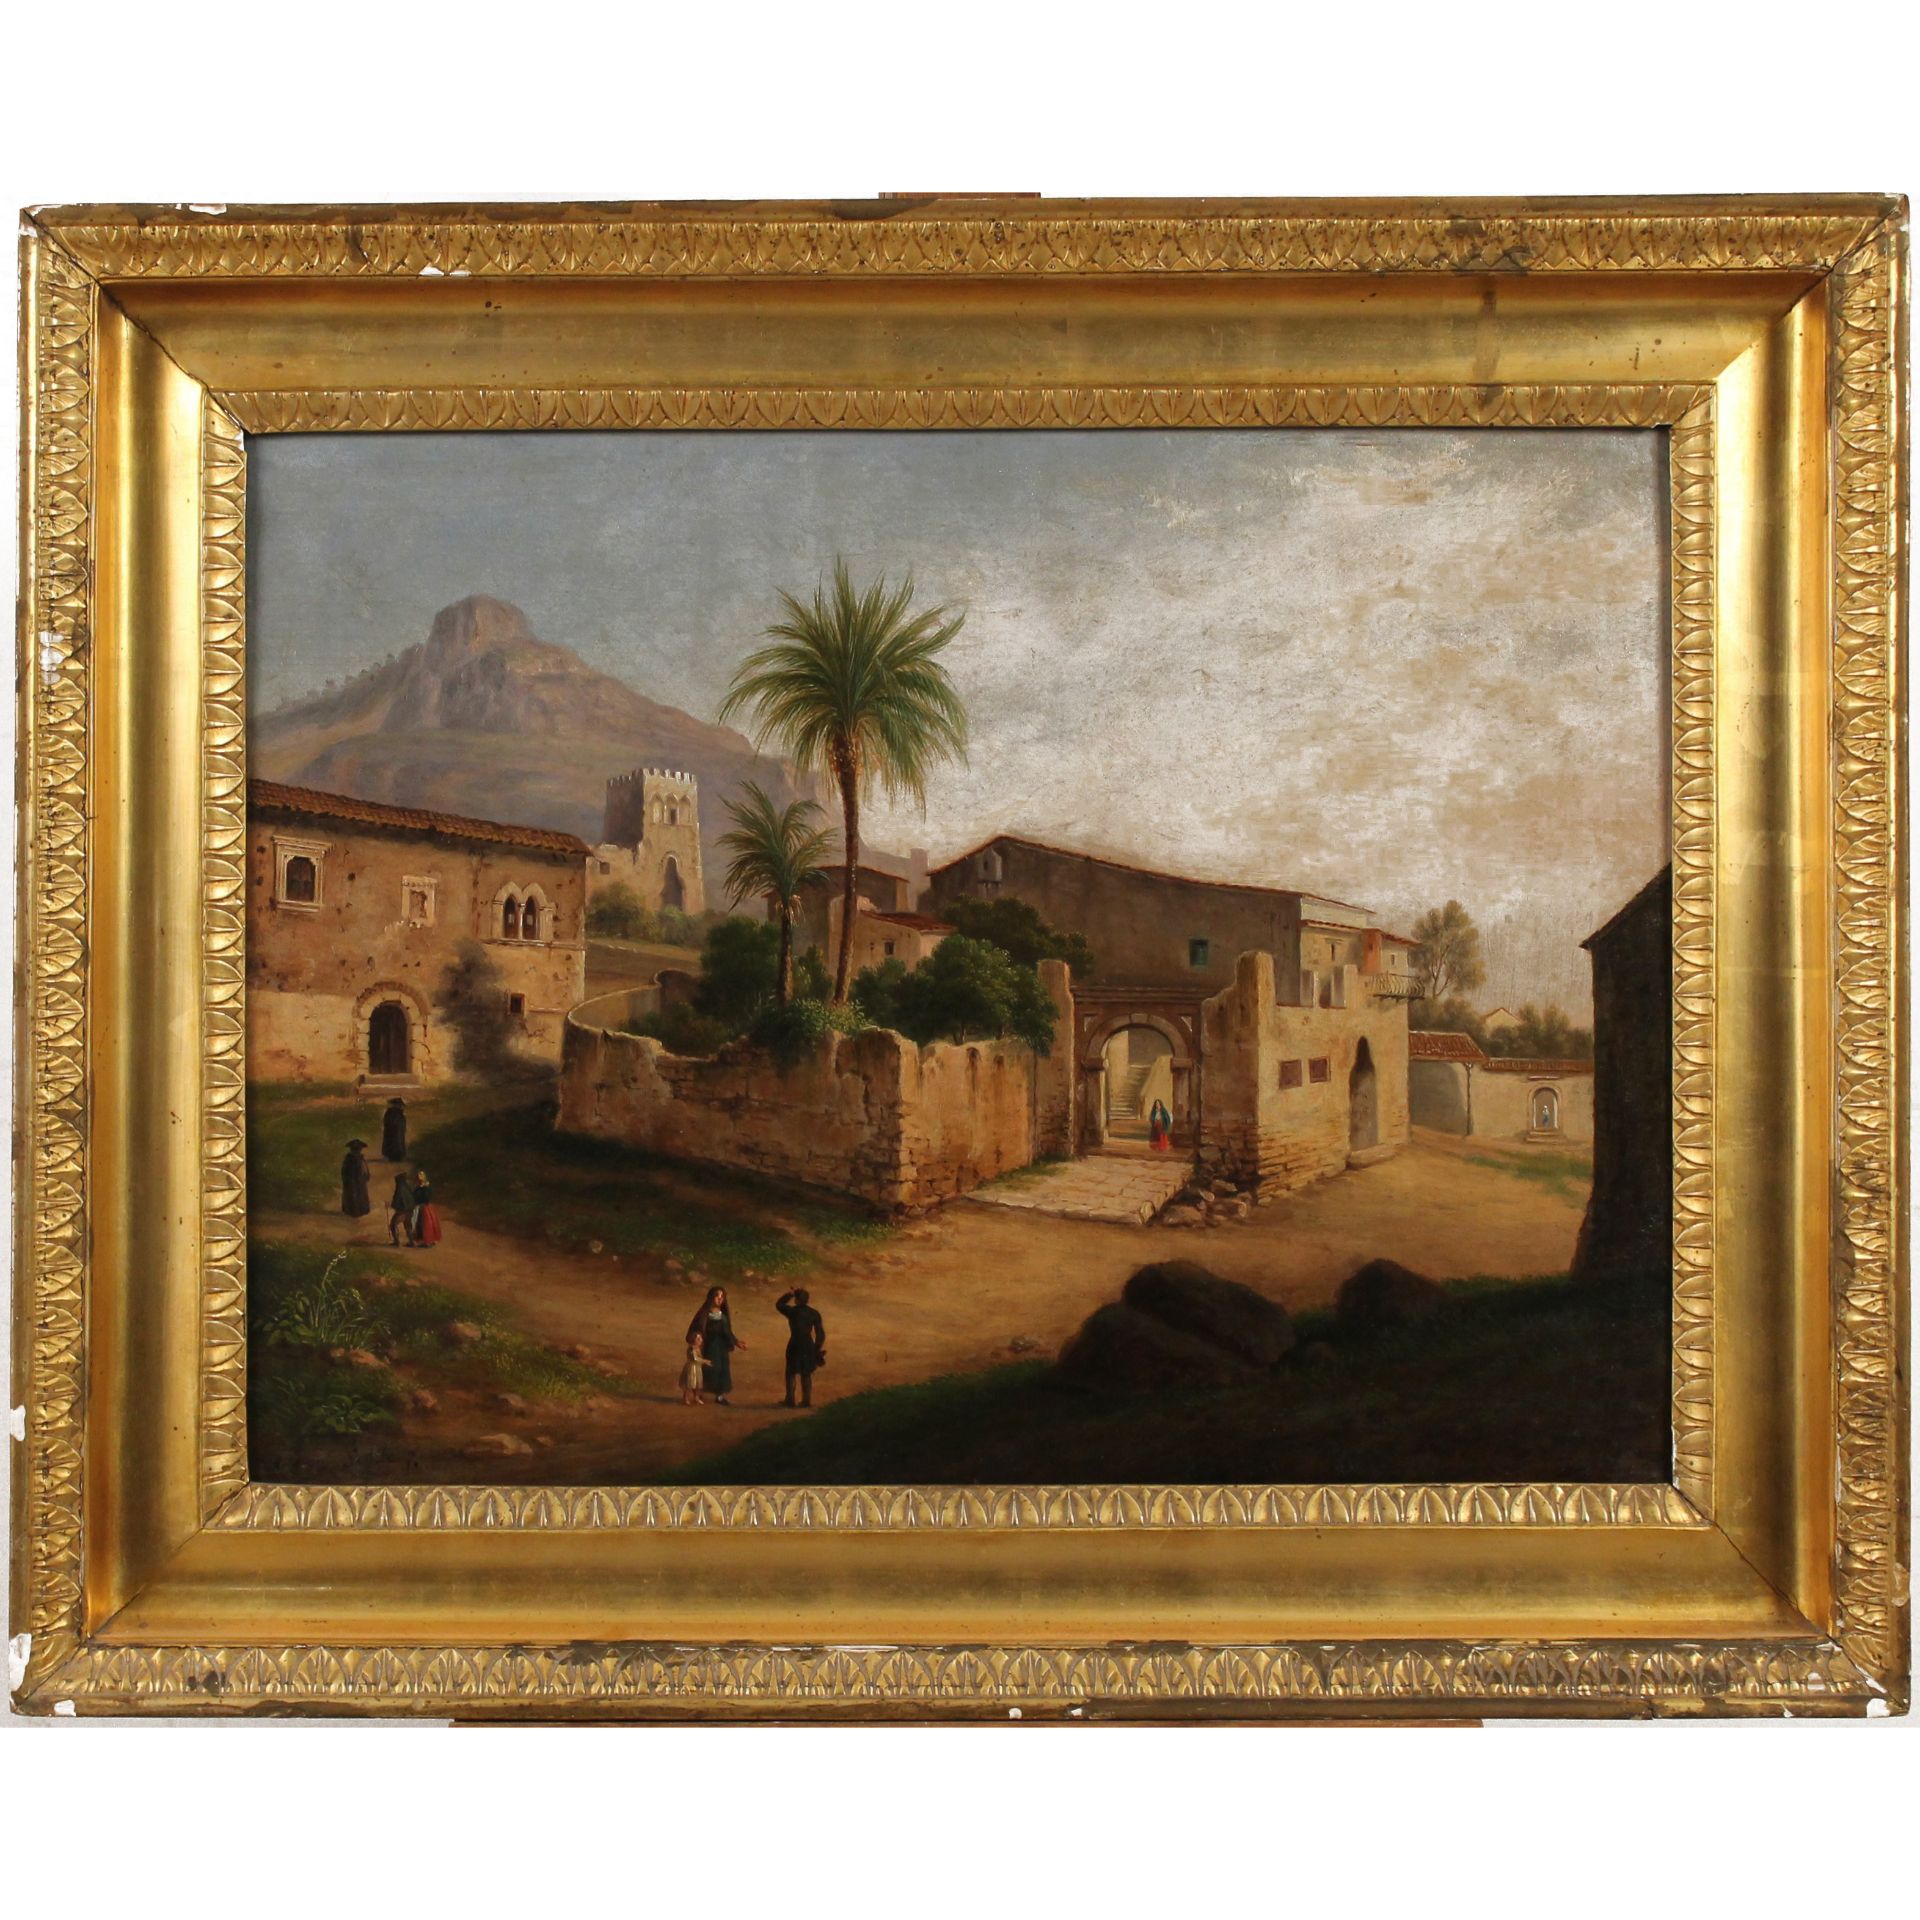 Andrea Sottile (1802/1856) "Fuori le mura" - "Out of the walls"